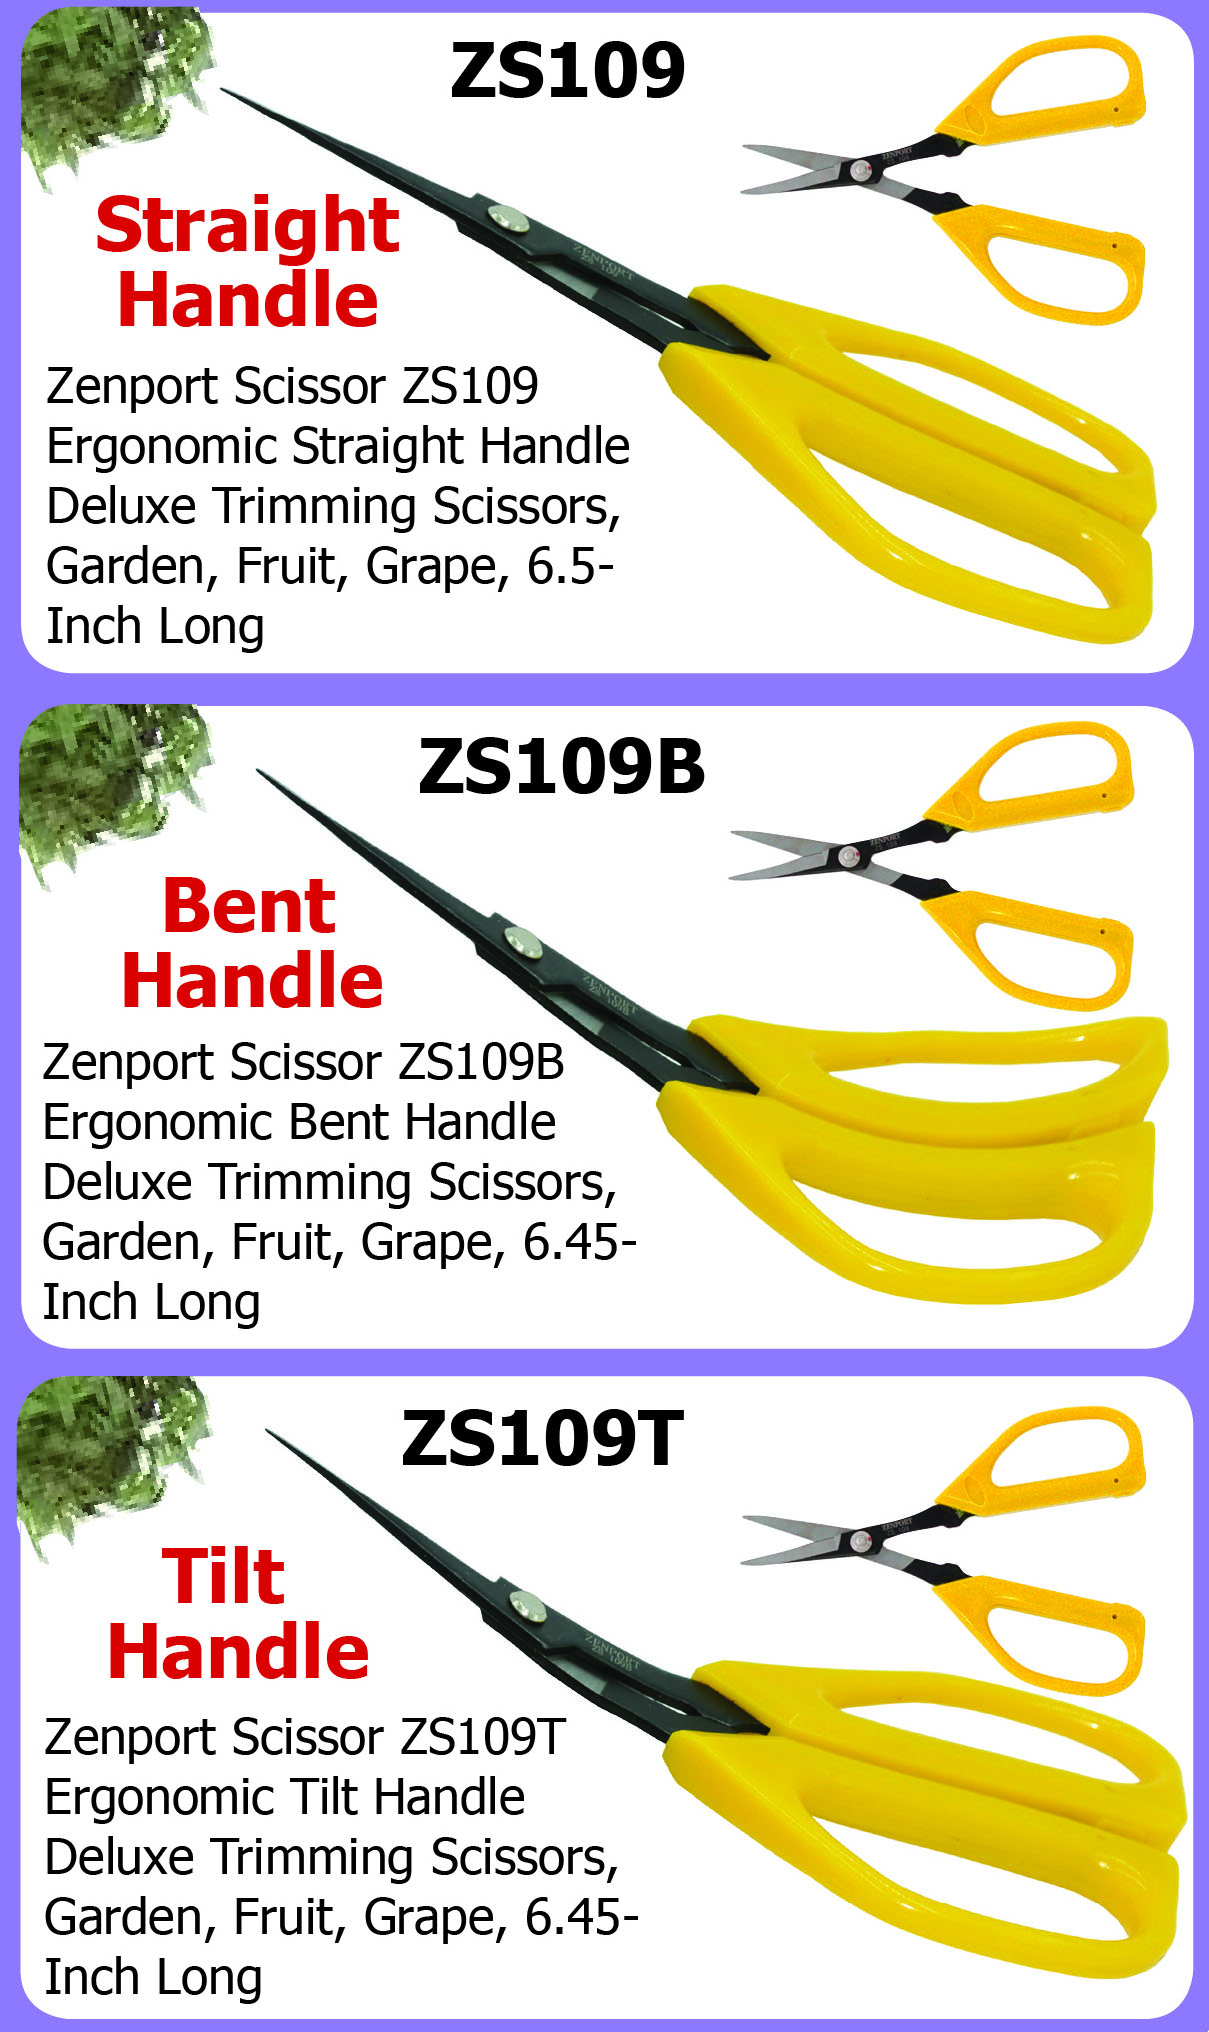 Zenport Scissors ZS109T Ergonomic Tilt Blade Deluxe Trimming Scissors, Garden, Fruit, Grape, 6.5-Inch Long - Click Image to Close